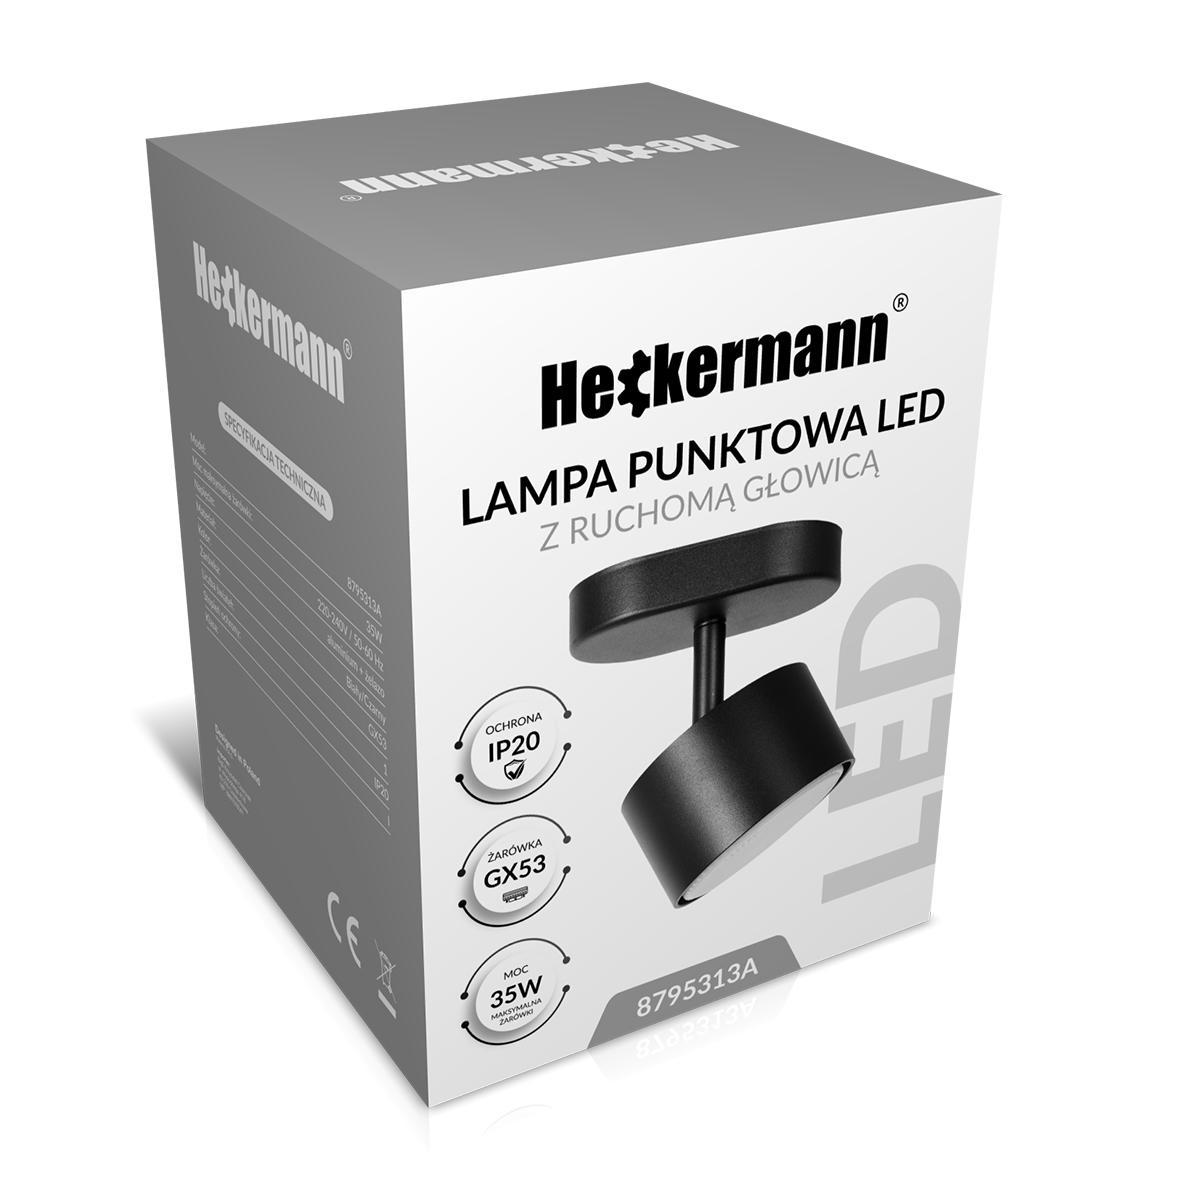 Lampa sufitowa punktowa LED Heckermann 8795313A Czarna 1x głowica 6 Full Screen